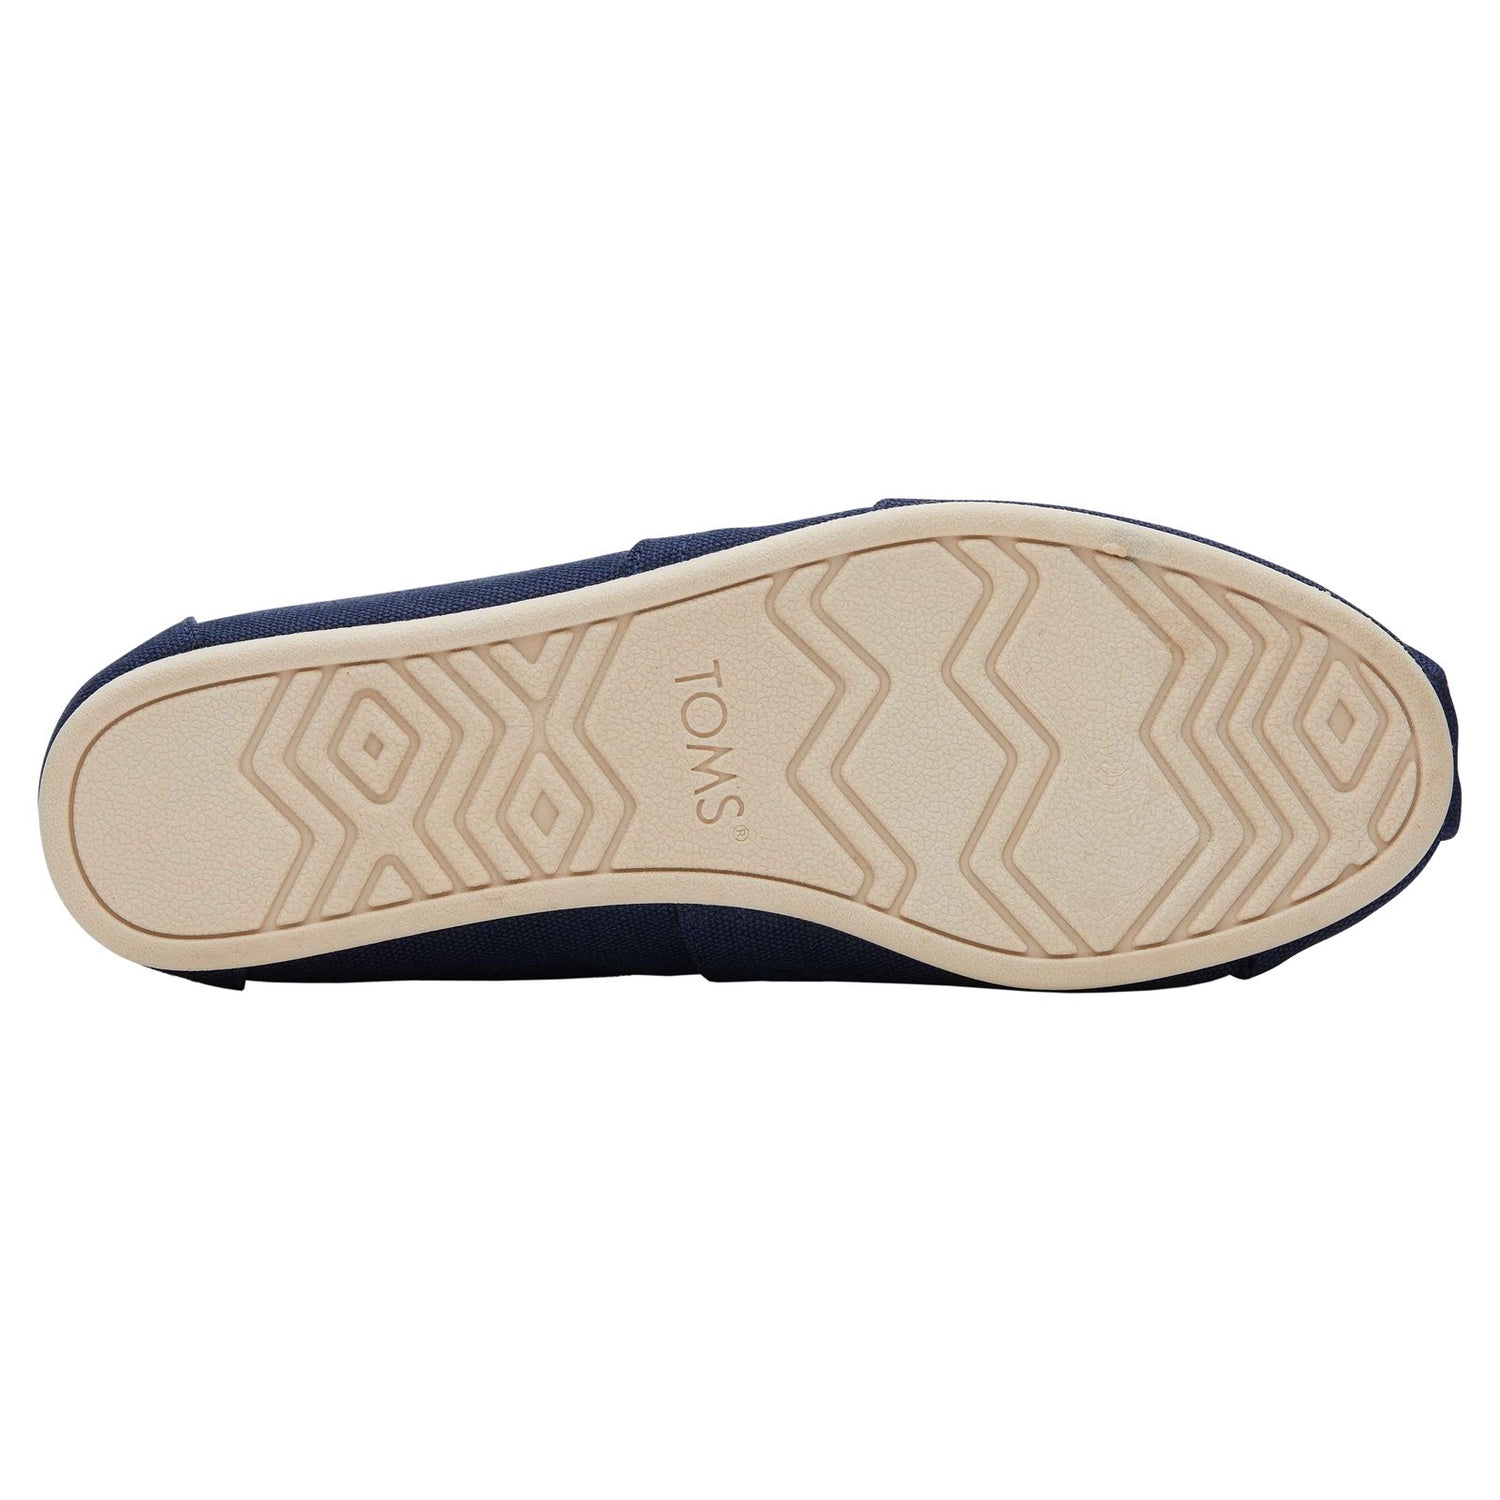 Peltz Shoes  Women's Toms Alpargata Recycled Slip-On - Wide Width NAVY 10019646